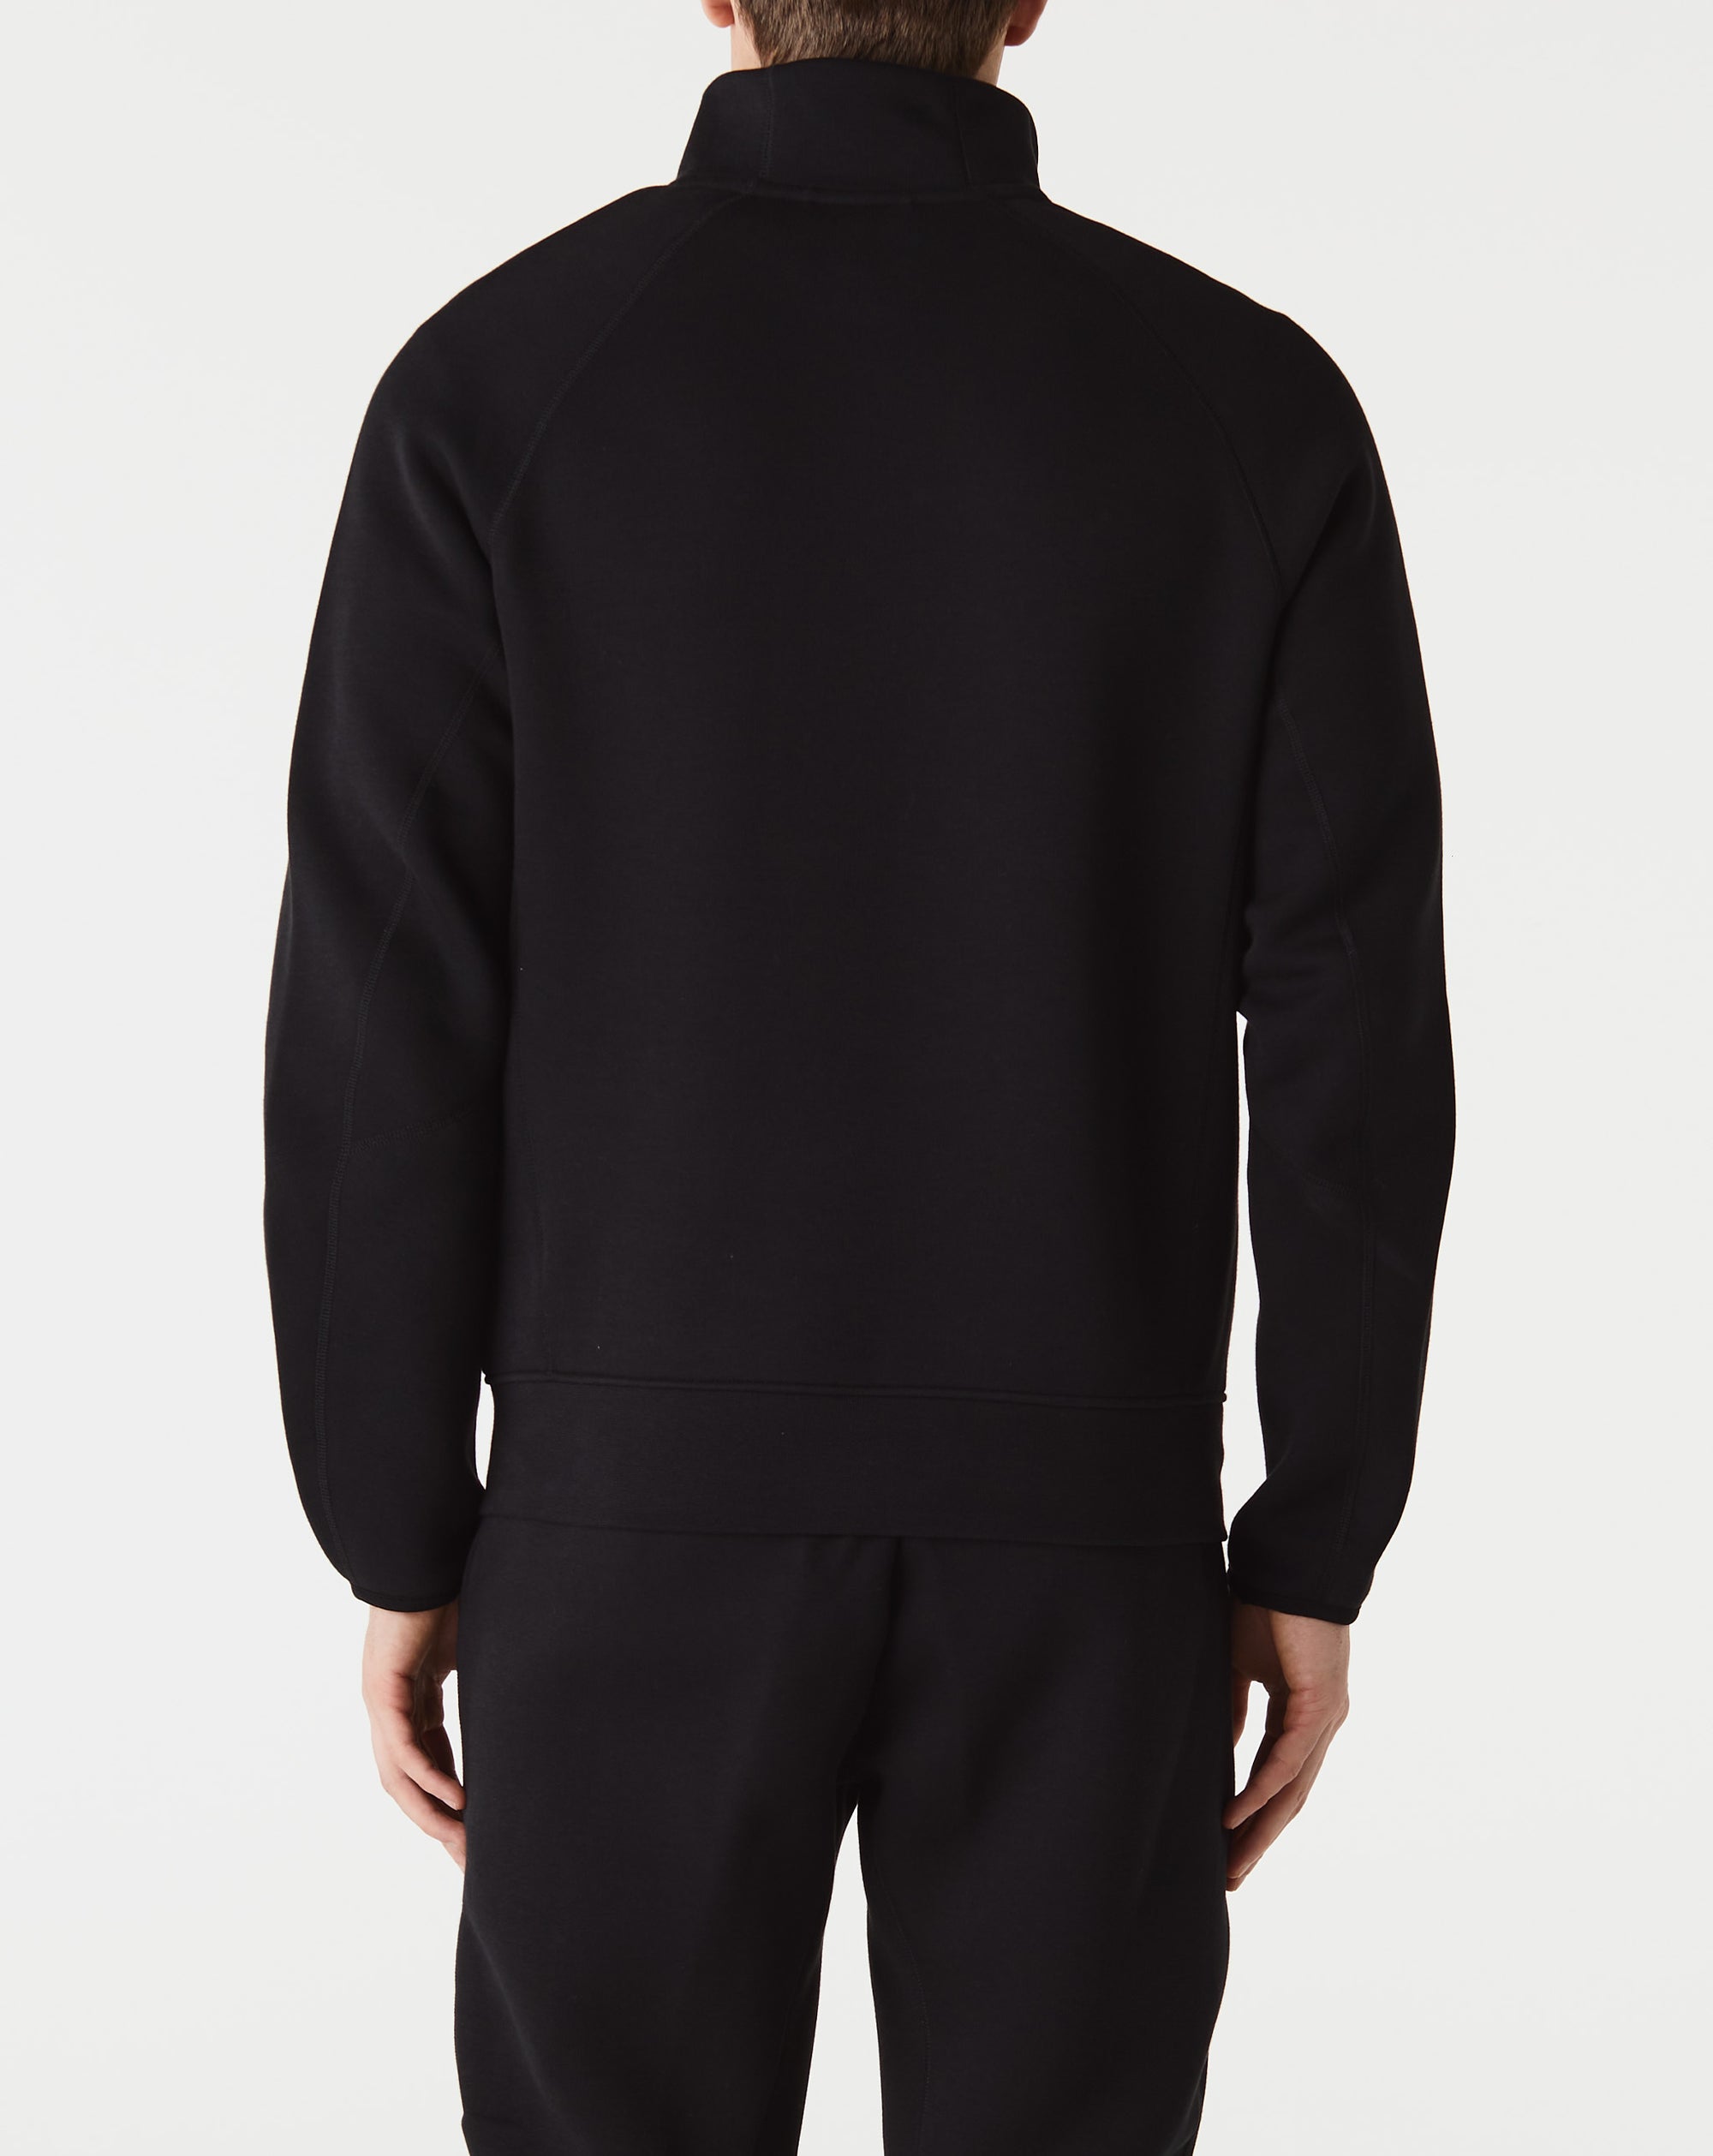 Nike Tech Fleece 1/2-Zip Sweatshirt - Rule of Next Apparel